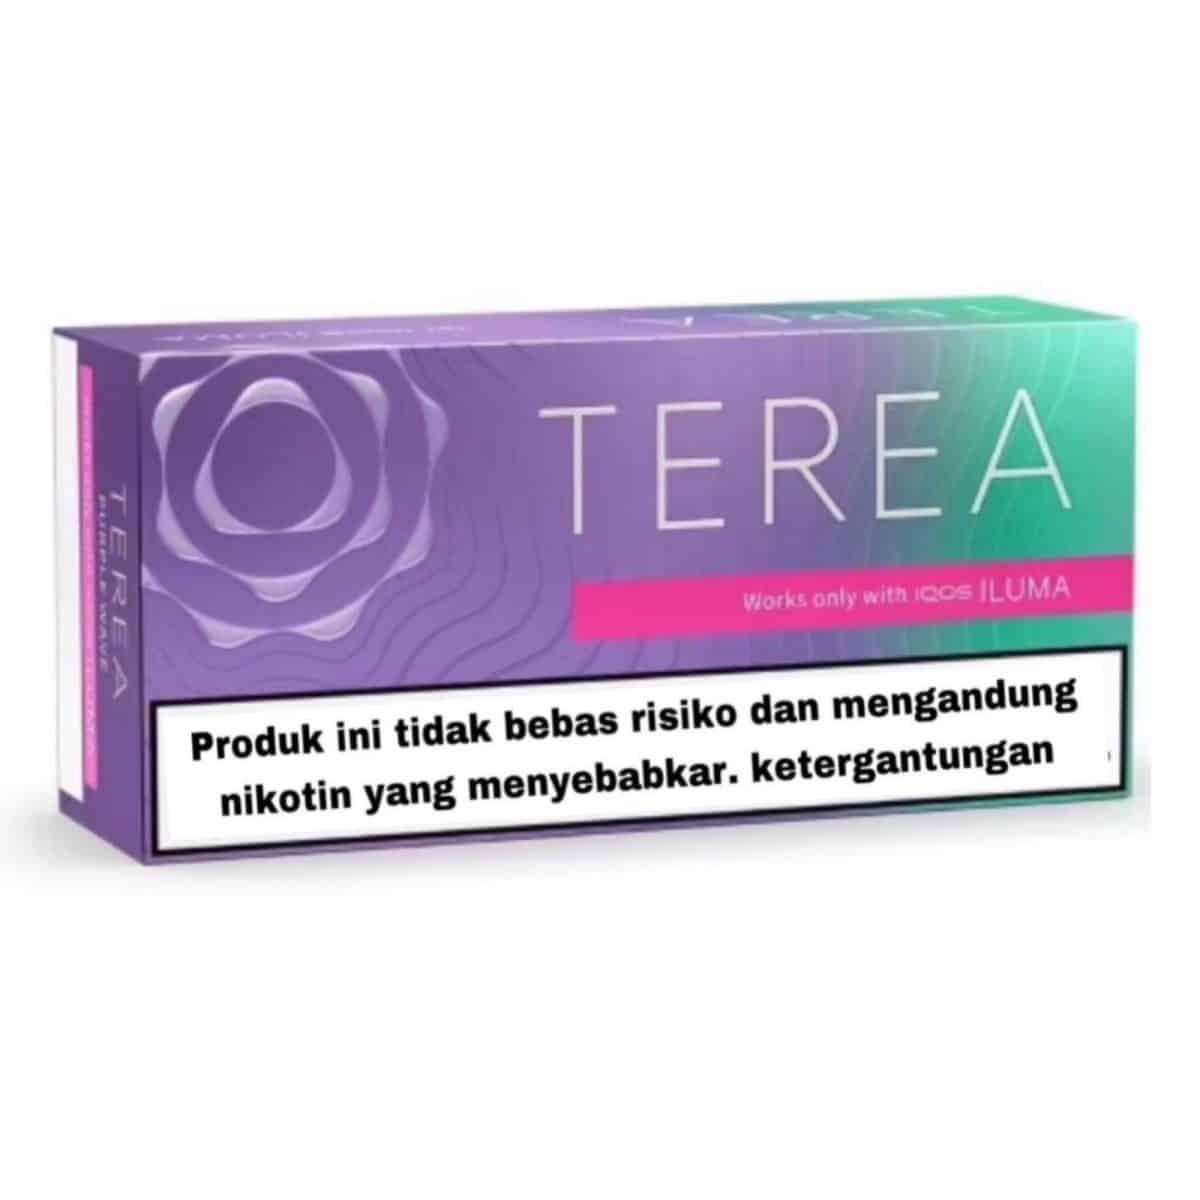 Buy Iqos Terea Purple for IQOS ILUMA